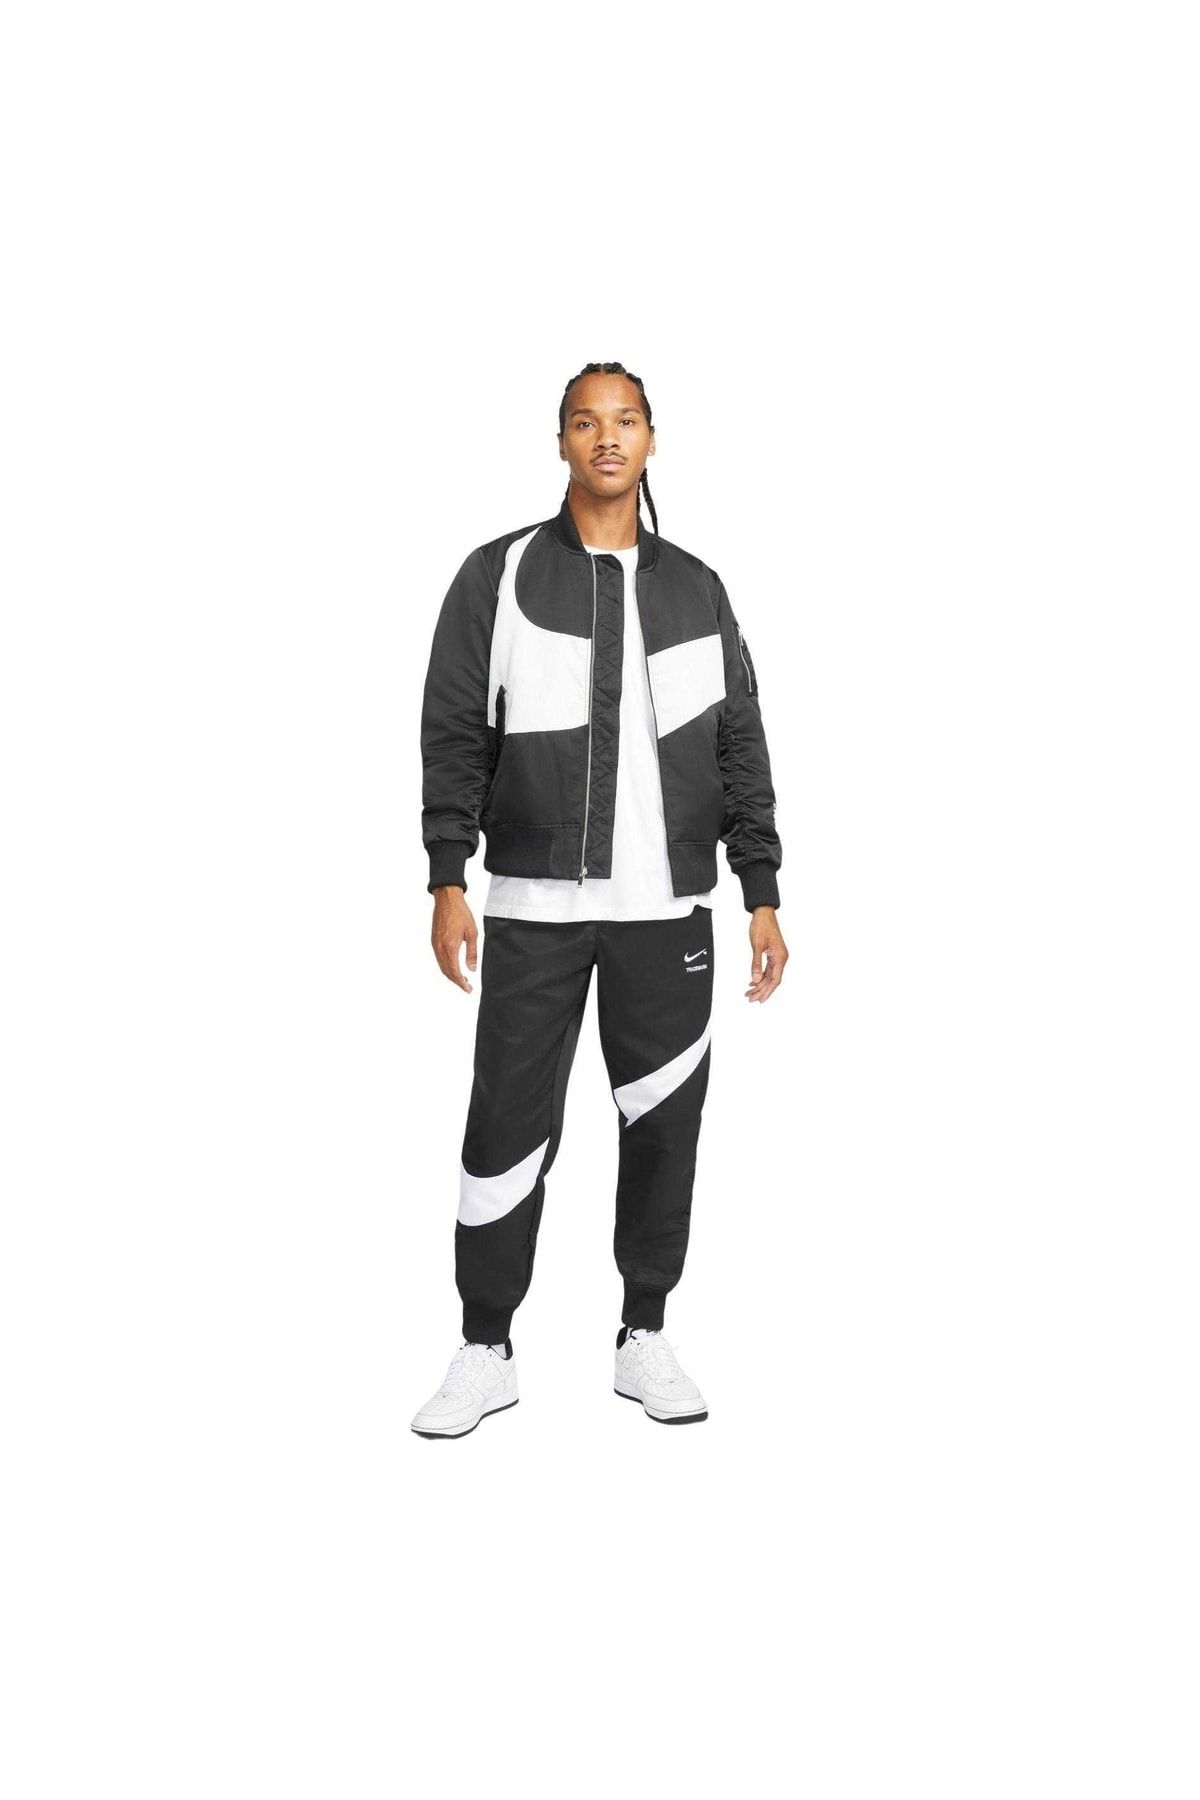 Nike Tn Tersinebilir Therma-fıt Ceket Siyah Erkek Dr7020-010